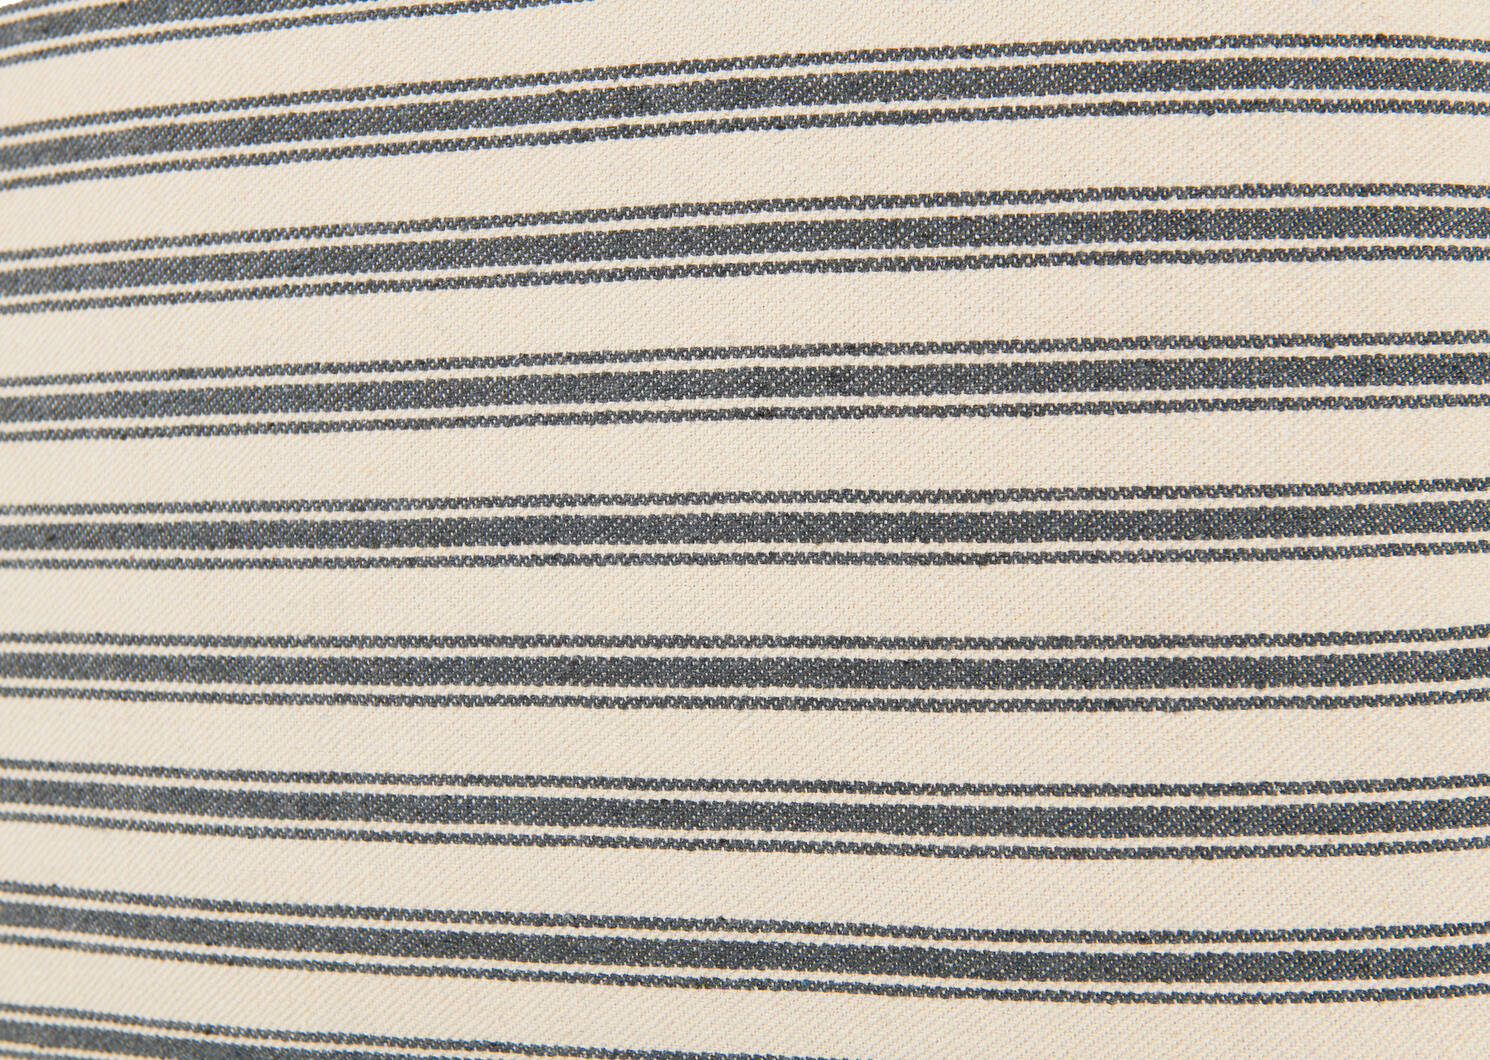 Wheaton Striped Pillow 20x20 Natura/G